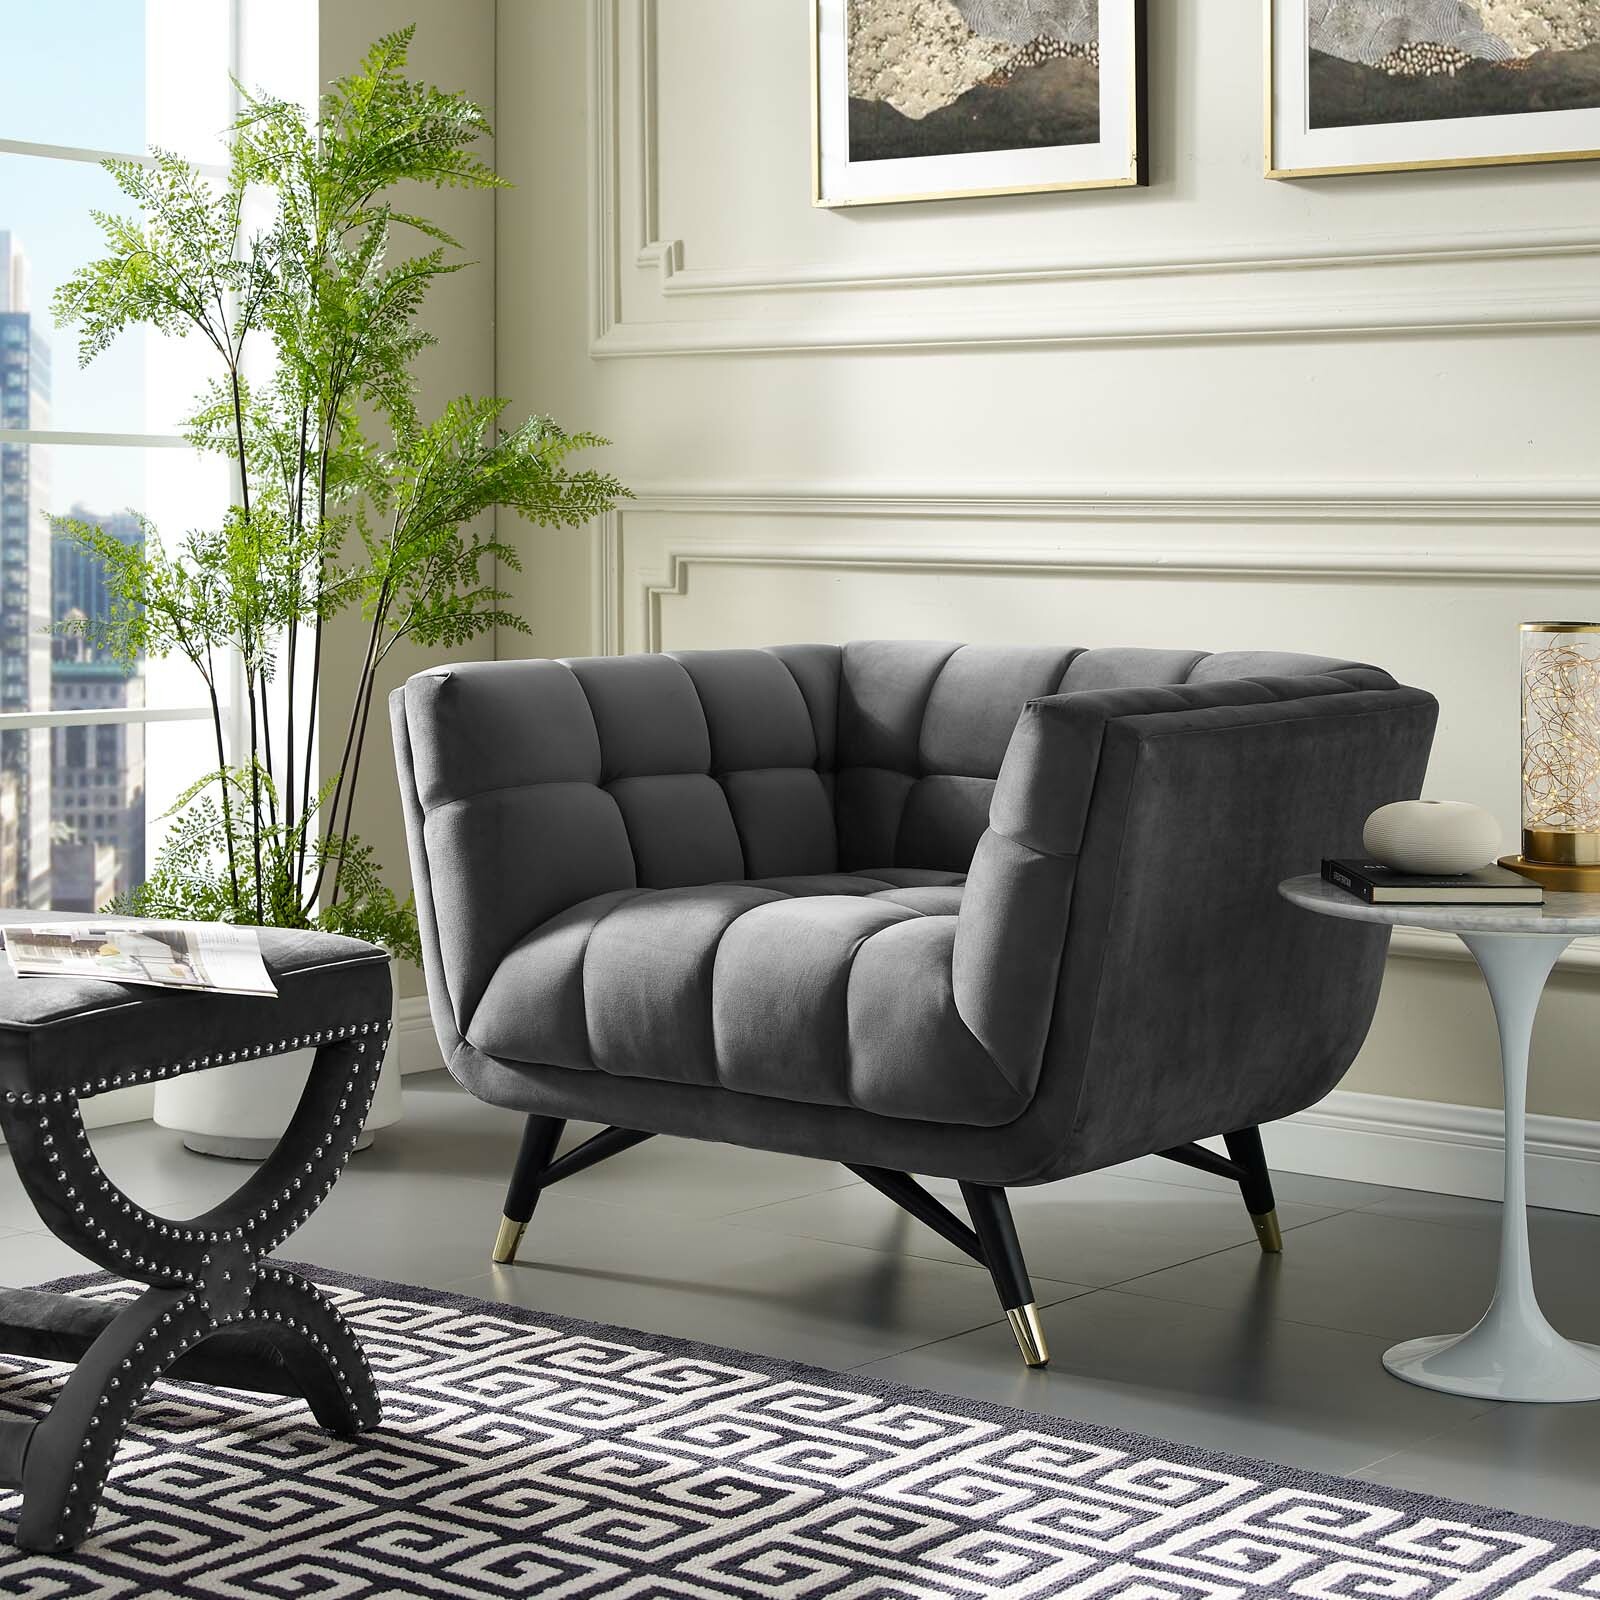 Living room chair ideas